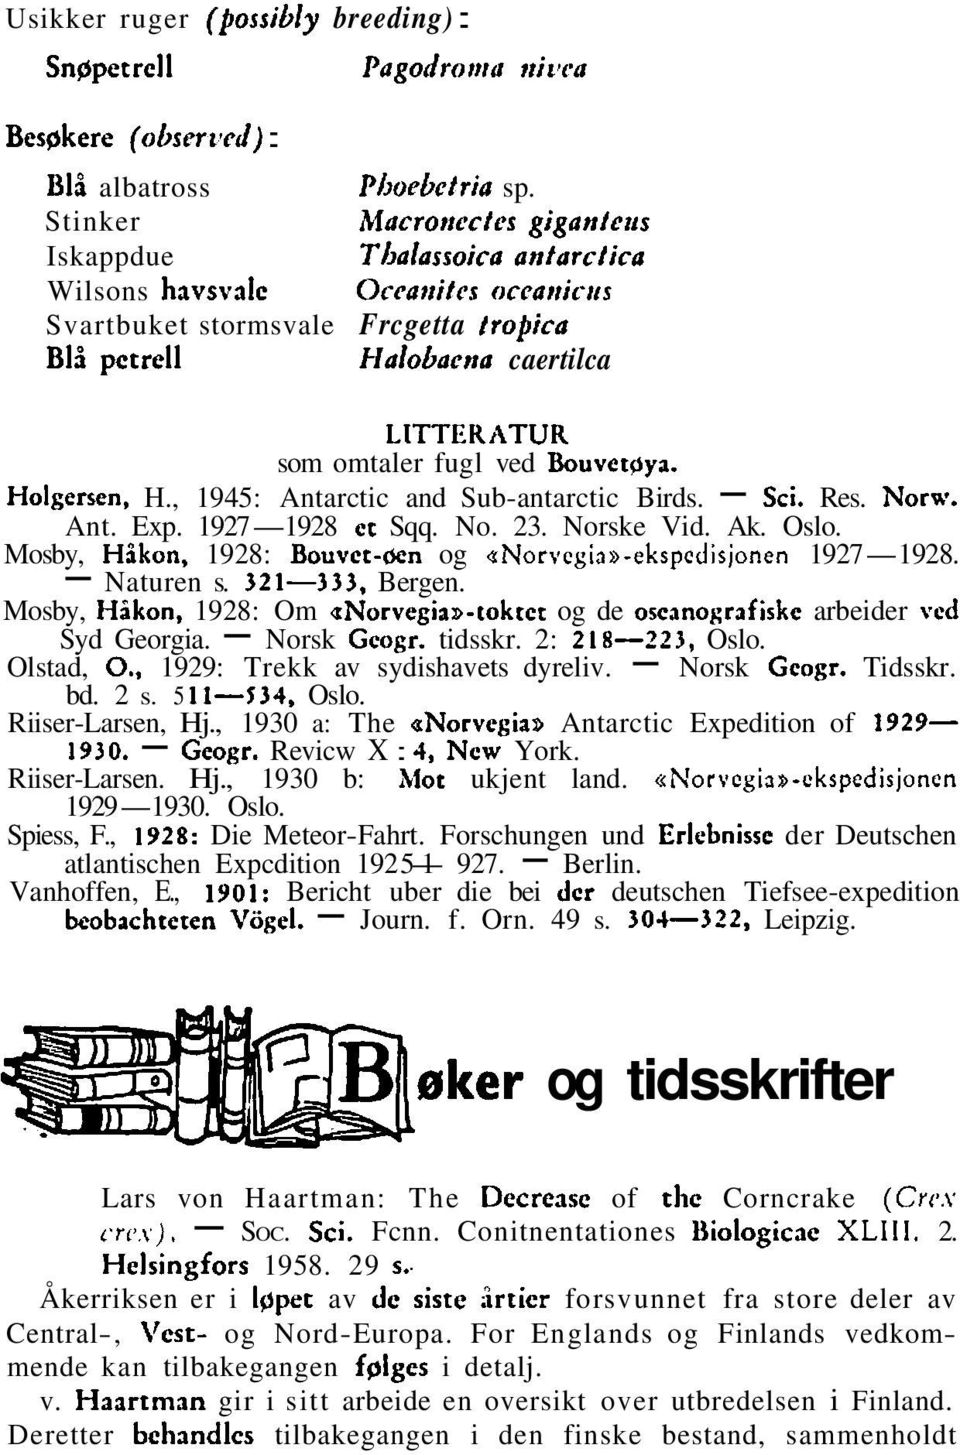 fugl ved Bouvetpya. Holgcrsen, H., 1945: Antarctic and Sub-antarctic Birds. - Sci. Res. Nora.. Ant. Exp. 1927-1928 et Sqq. No. 23. Norske Vid. Ak. Oslo. Mosby, Hikon.